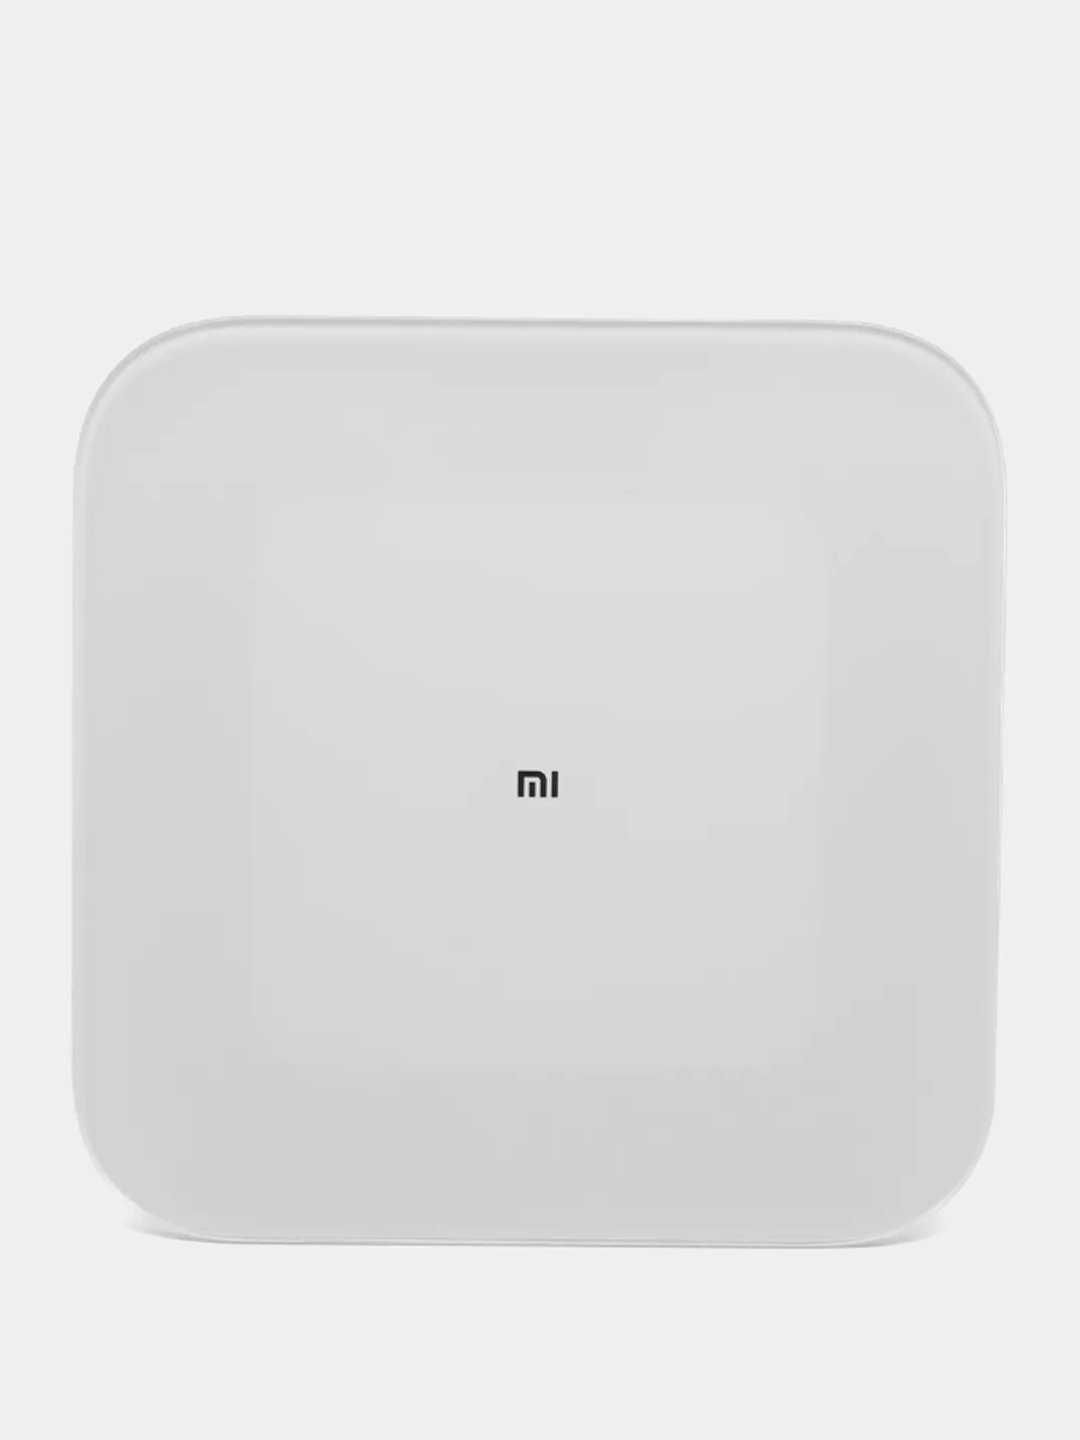 Электронные весы Xiaomi Mi Smart Scale 2 Global Aqlli tarozi elektron